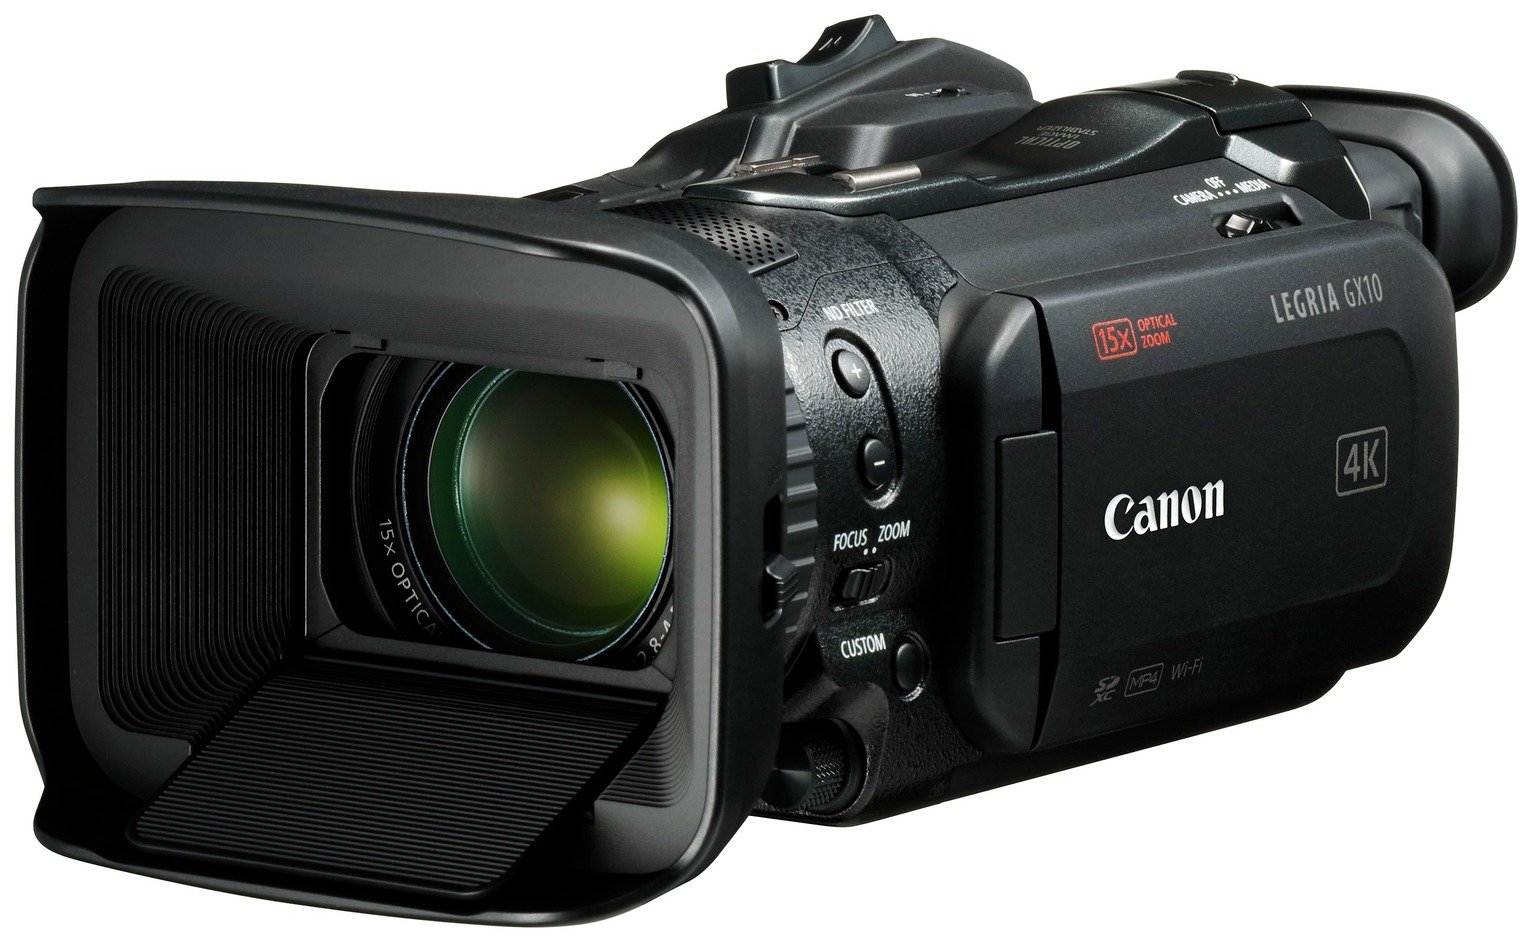 Canon Legria GX10 Camcorder review